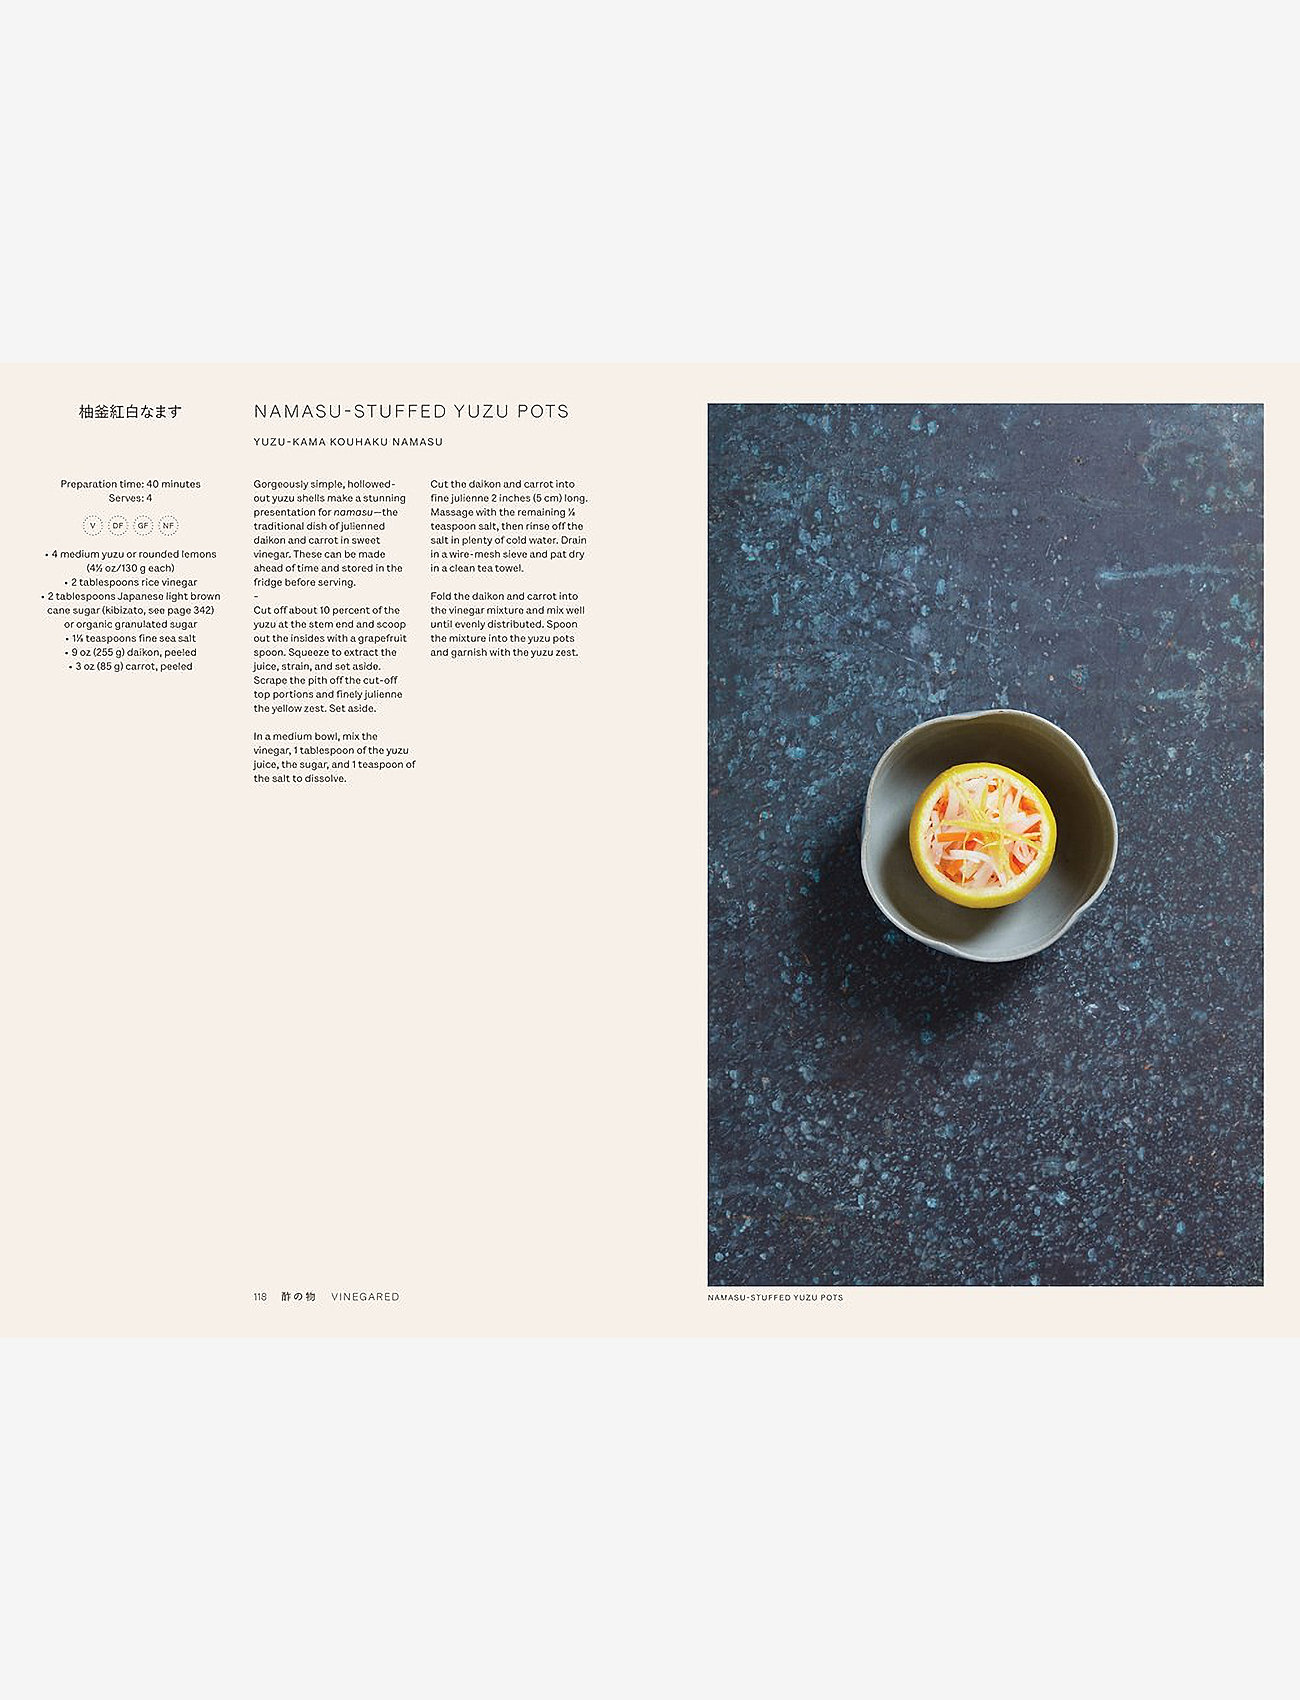 New Mags - Japan - The Vegetarian Cookbook - geburtstagsgeschenke - orange - 1